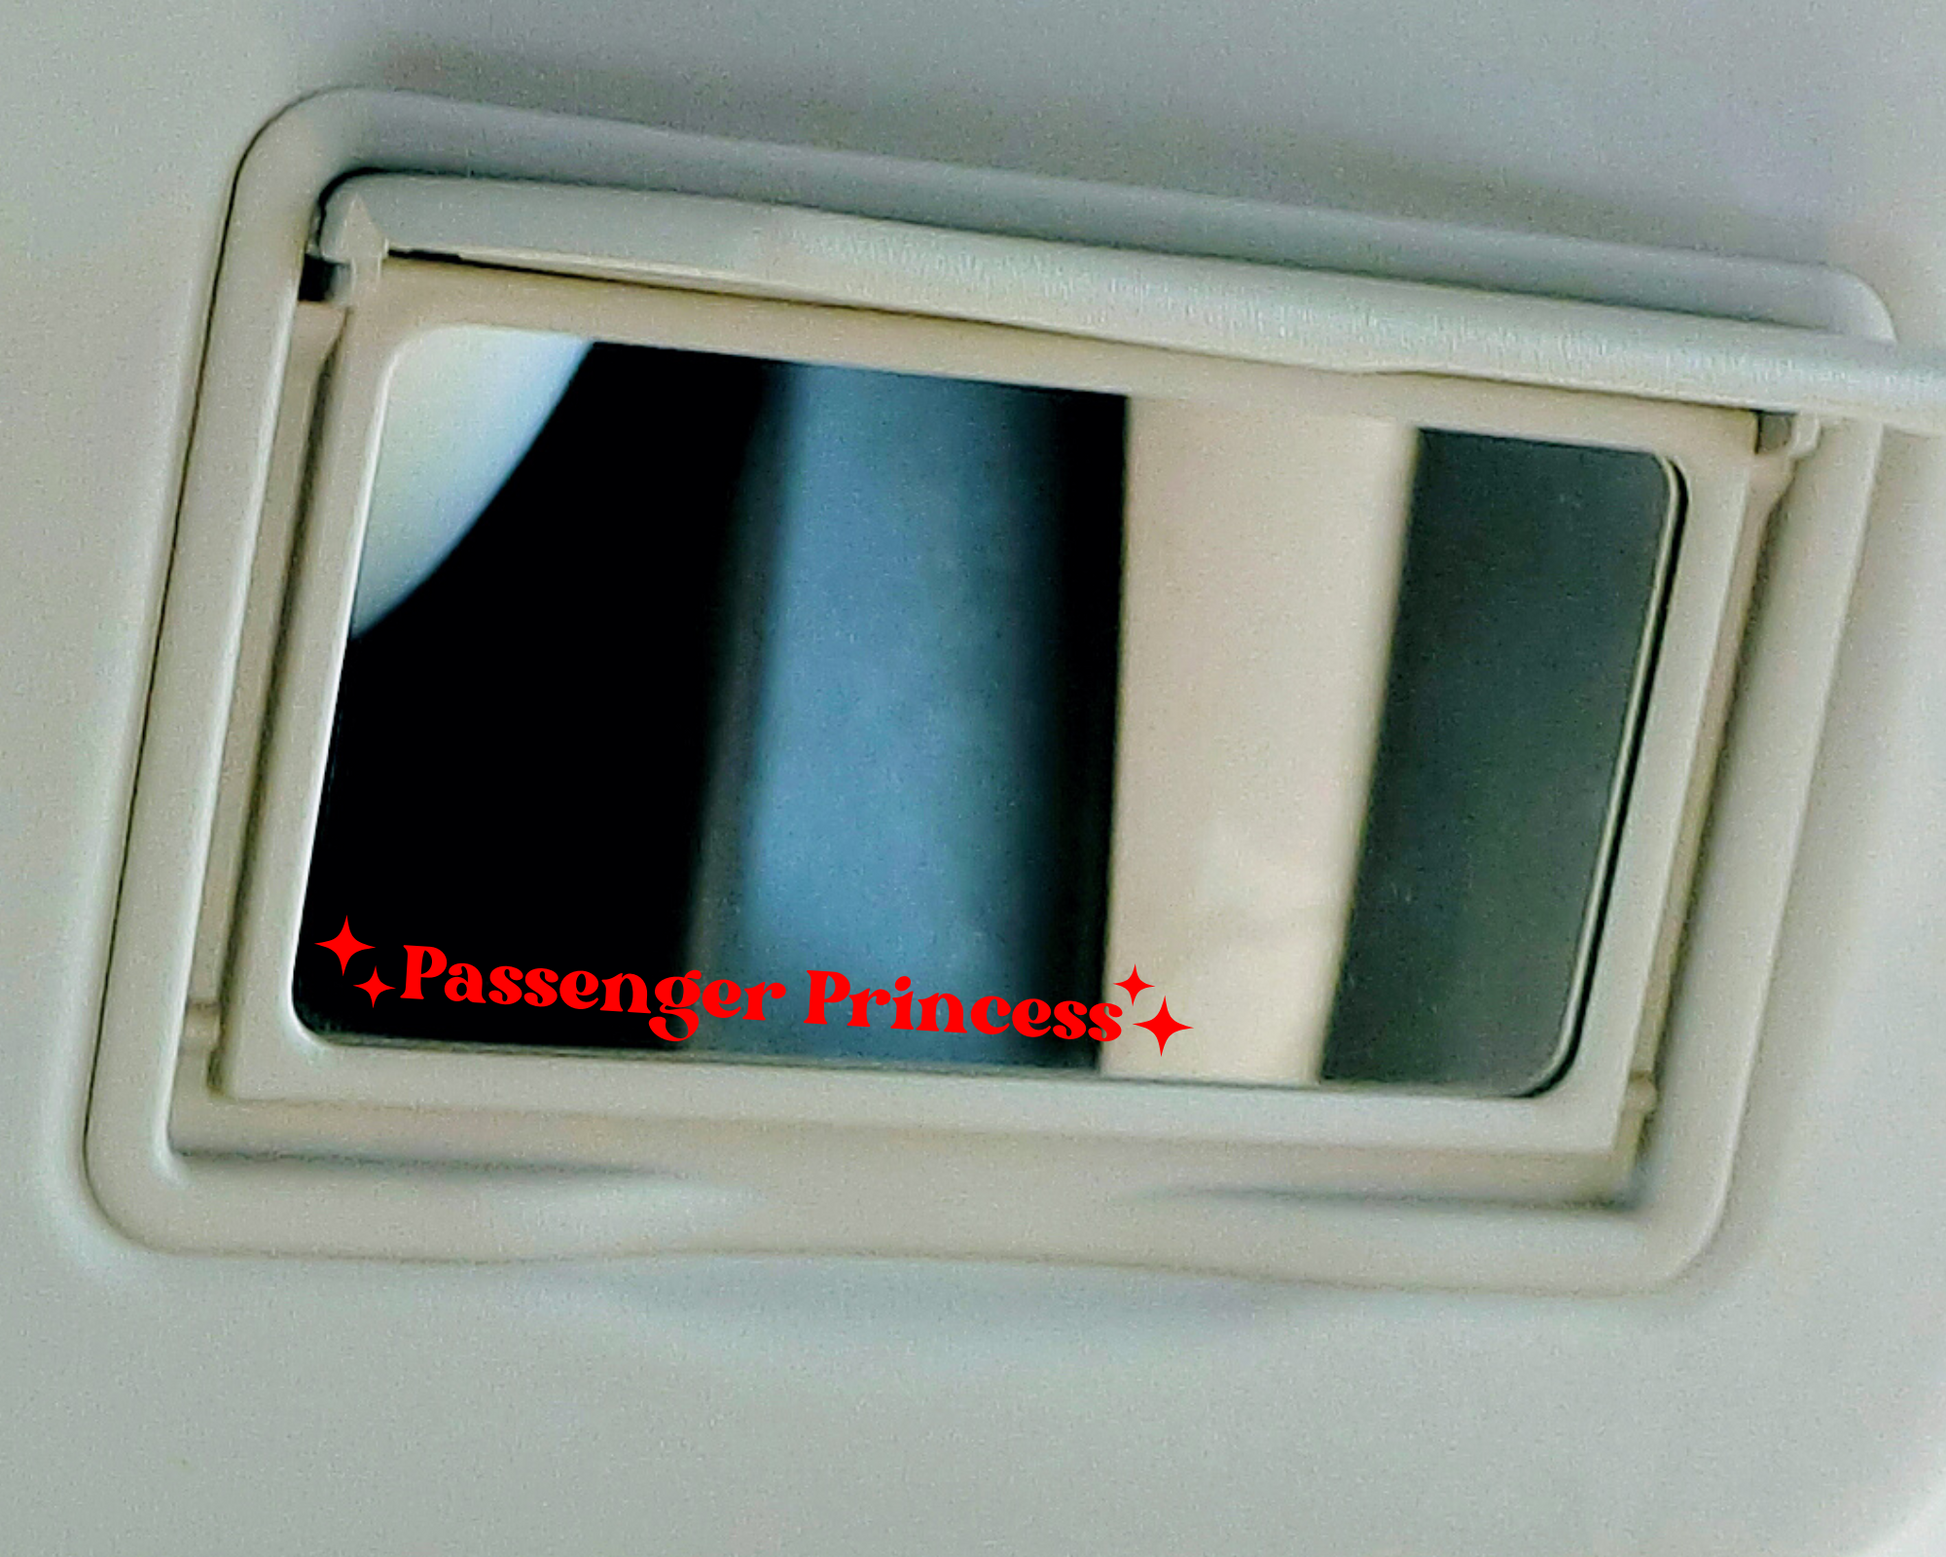 Passenger Princess Mirror Decal